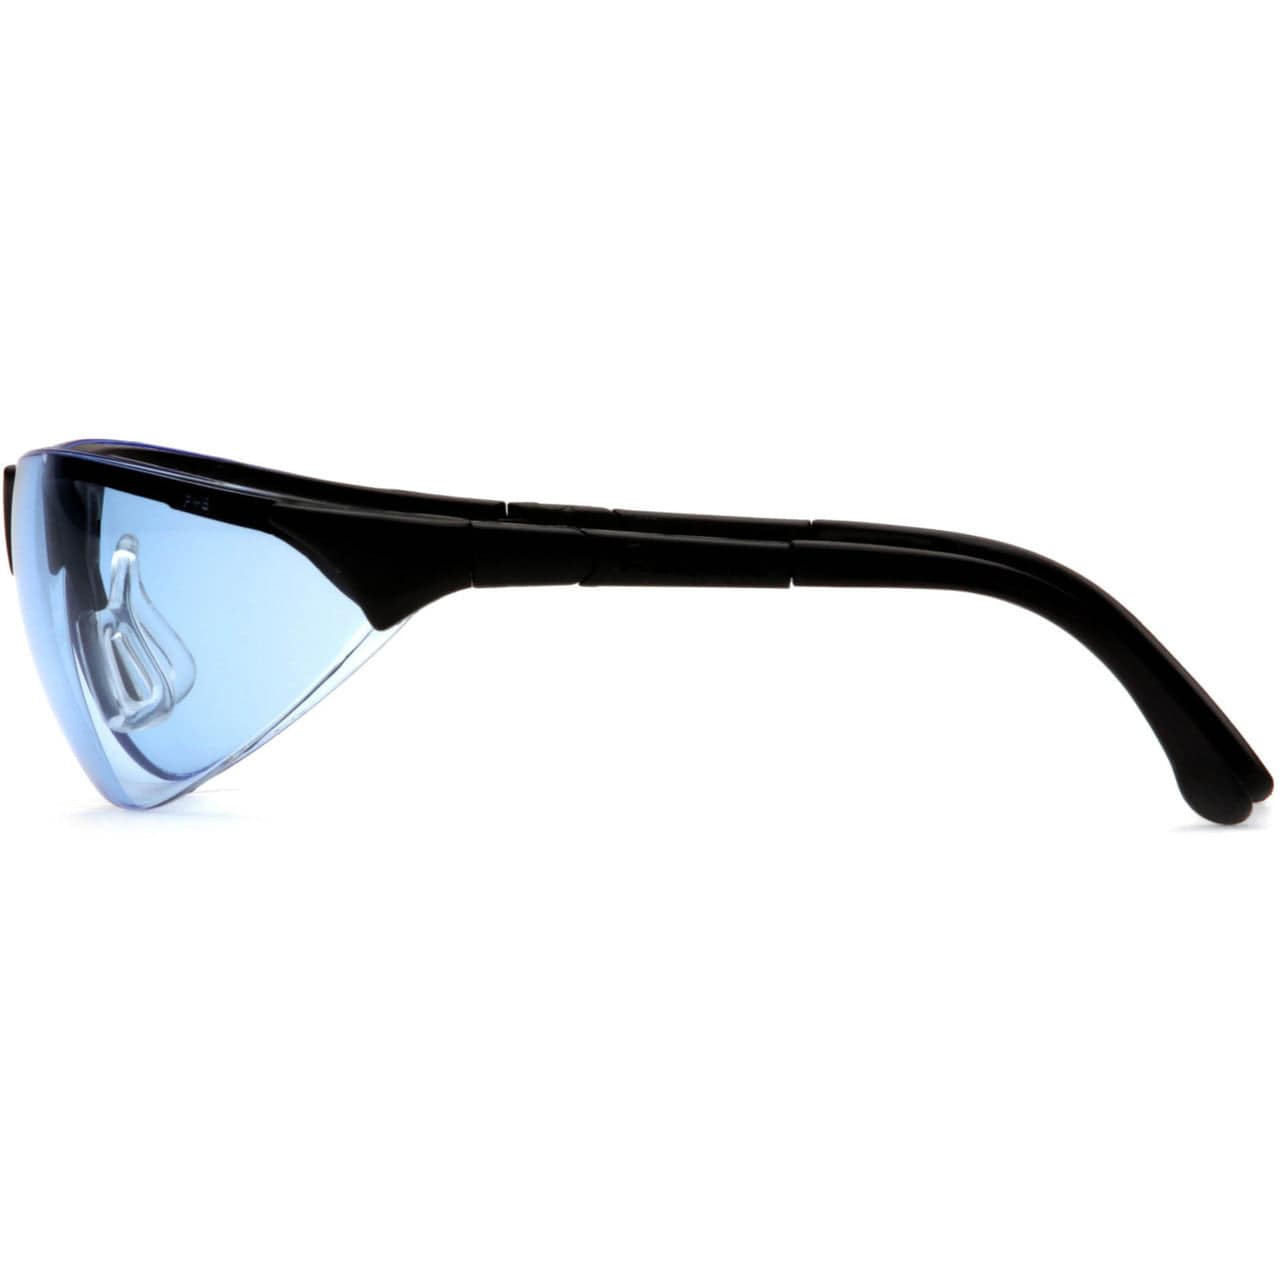 Pyramex Rendezvous Safety Glasses Black Frame Infinity Blue Lens SB2860S Side